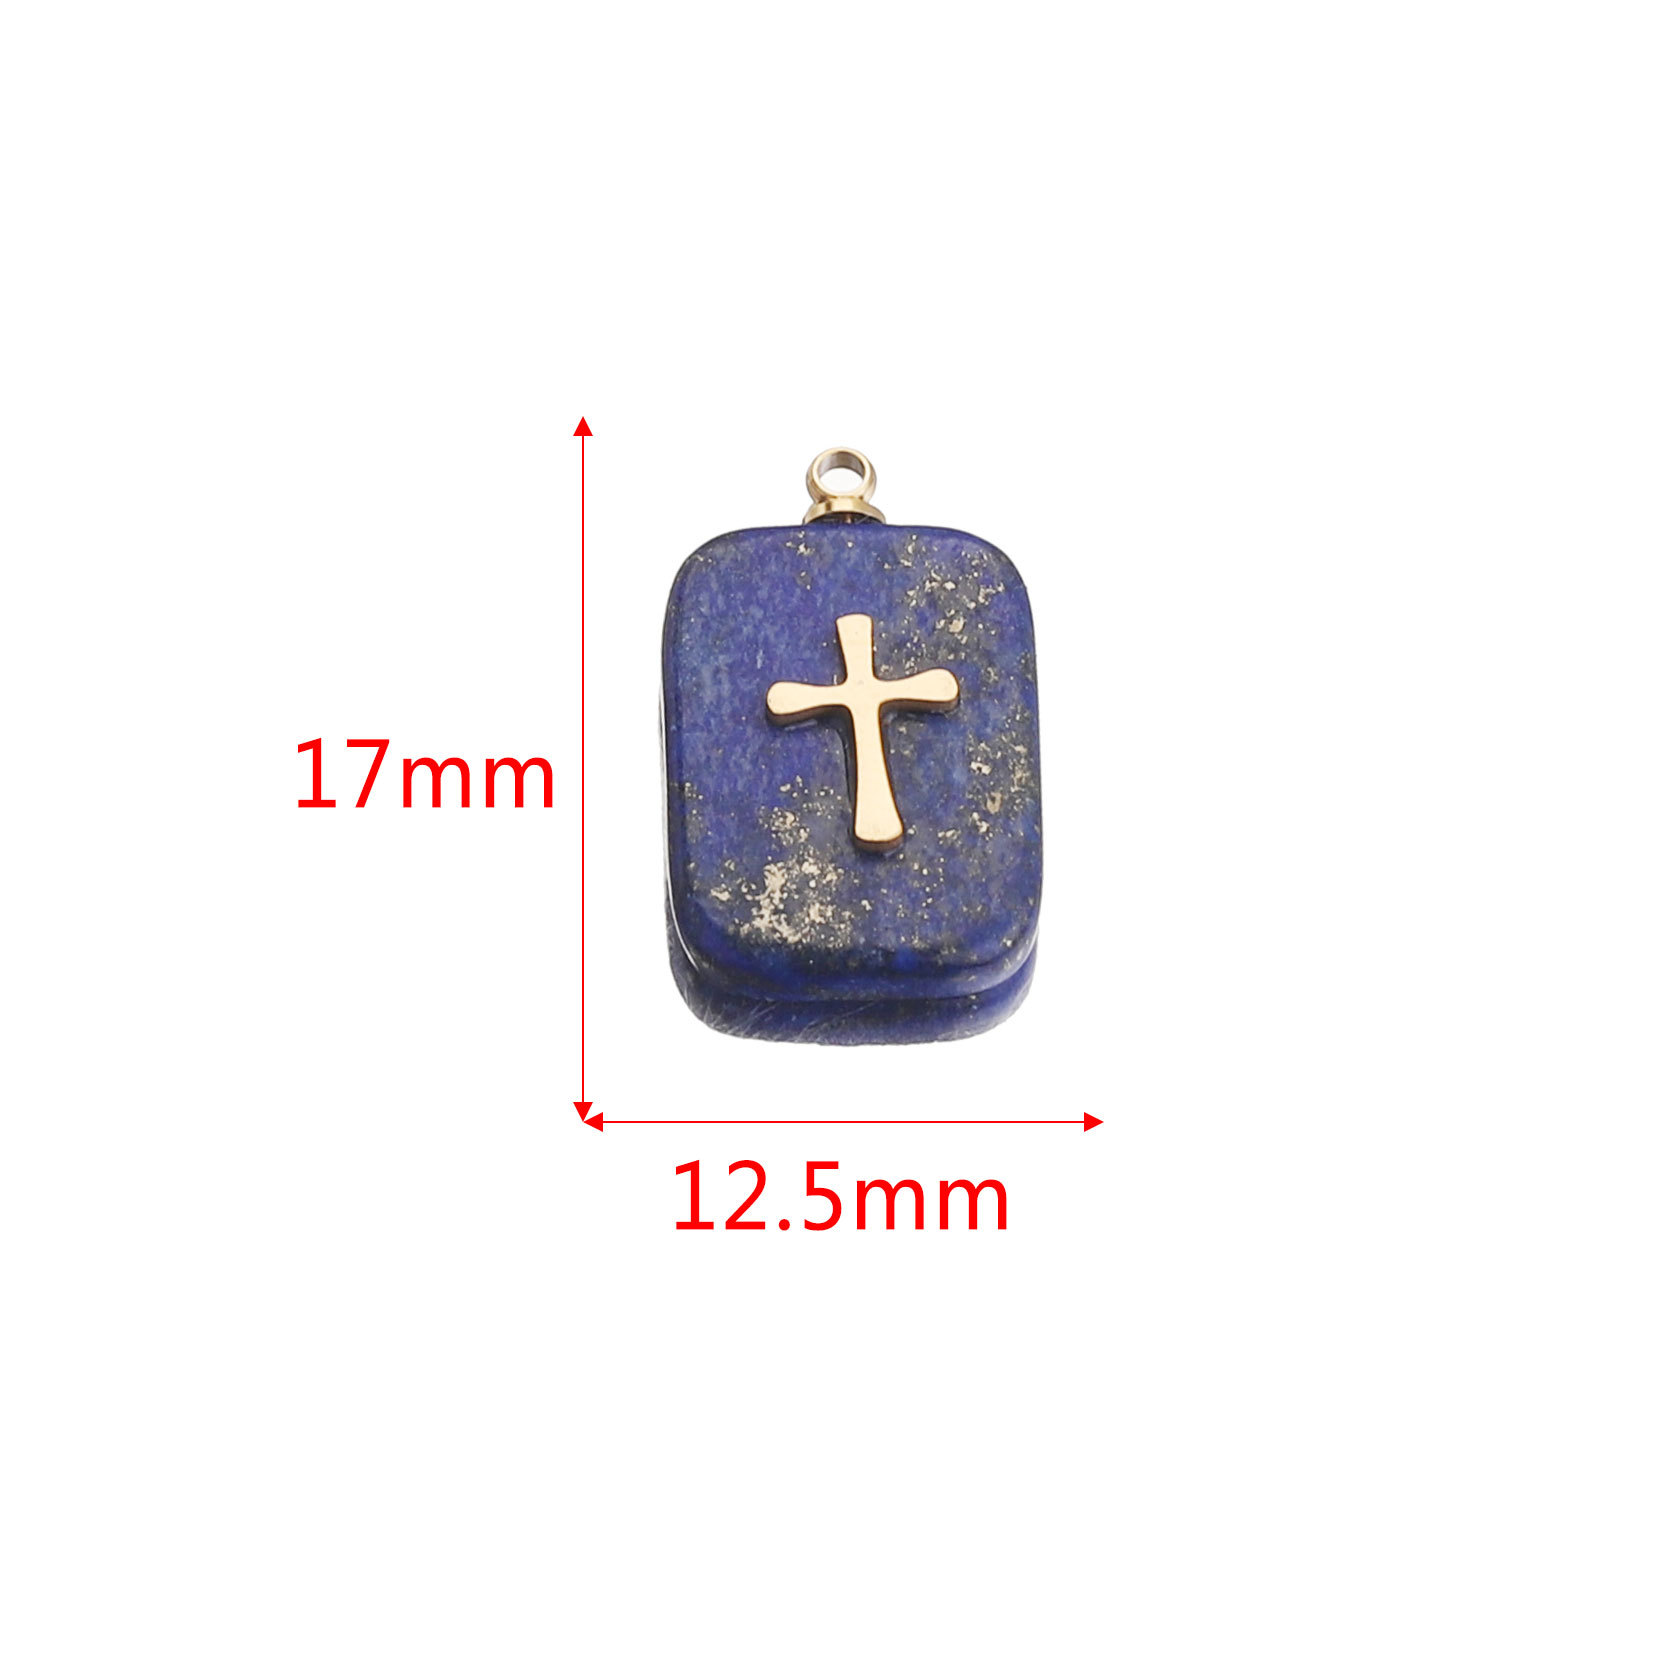 18:Rectangular bronze-cross